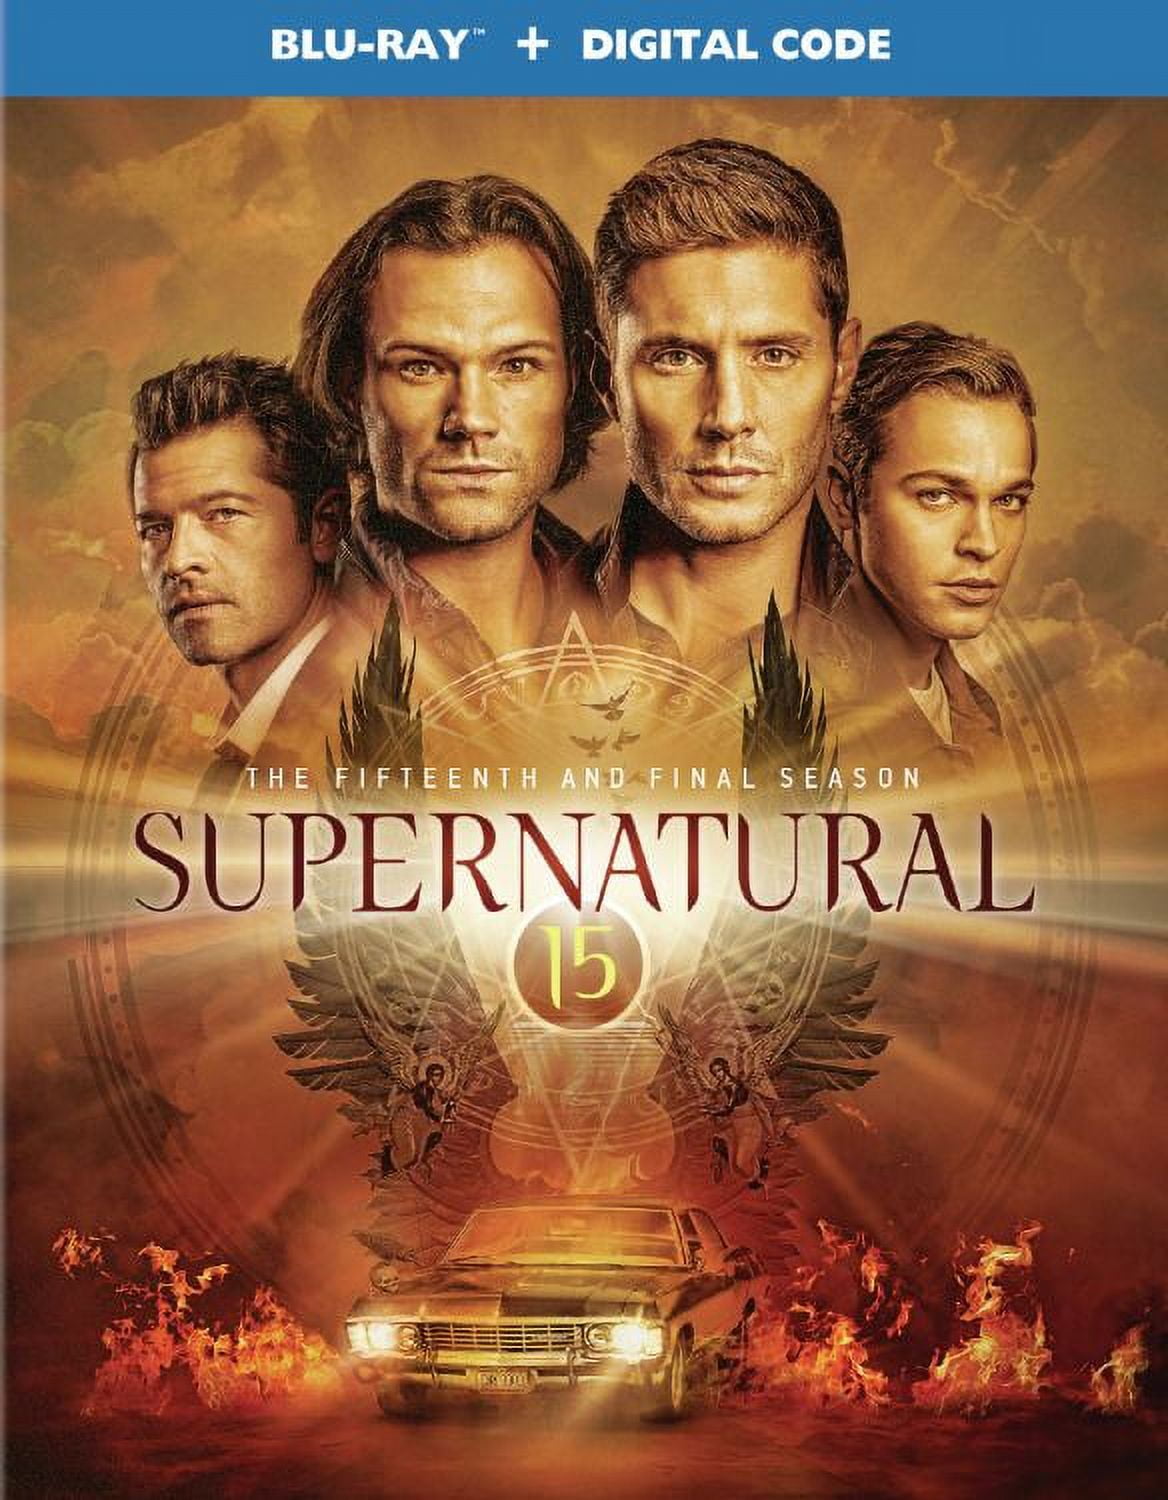 Warner Brothers Supernatural: The Fifteenth and Final Season (Blu-ray)